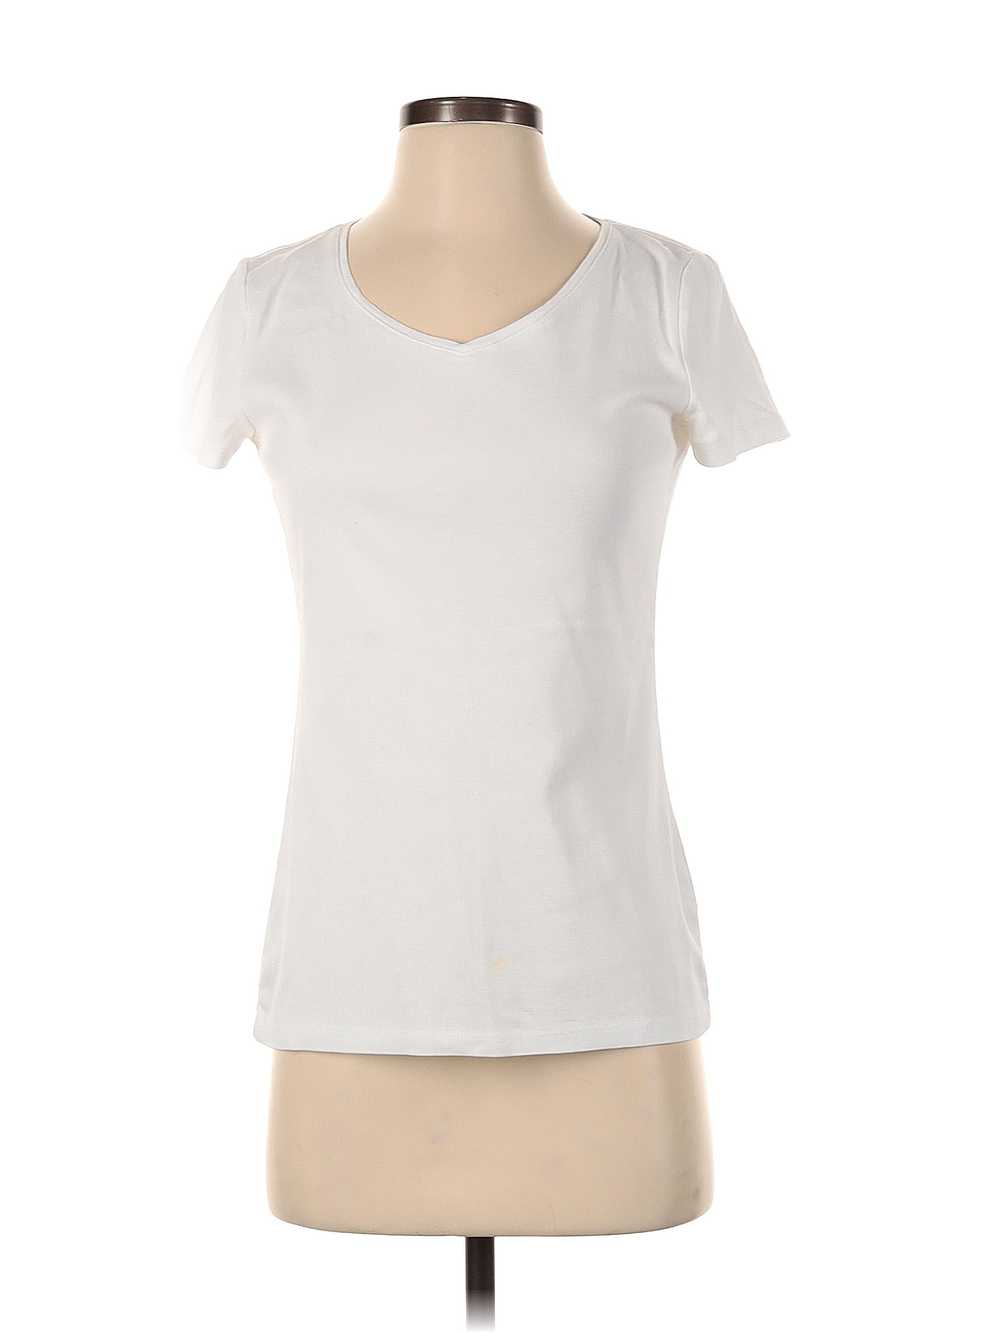 Talbots Women White Short Sleeve T-Shirt XS - image 1